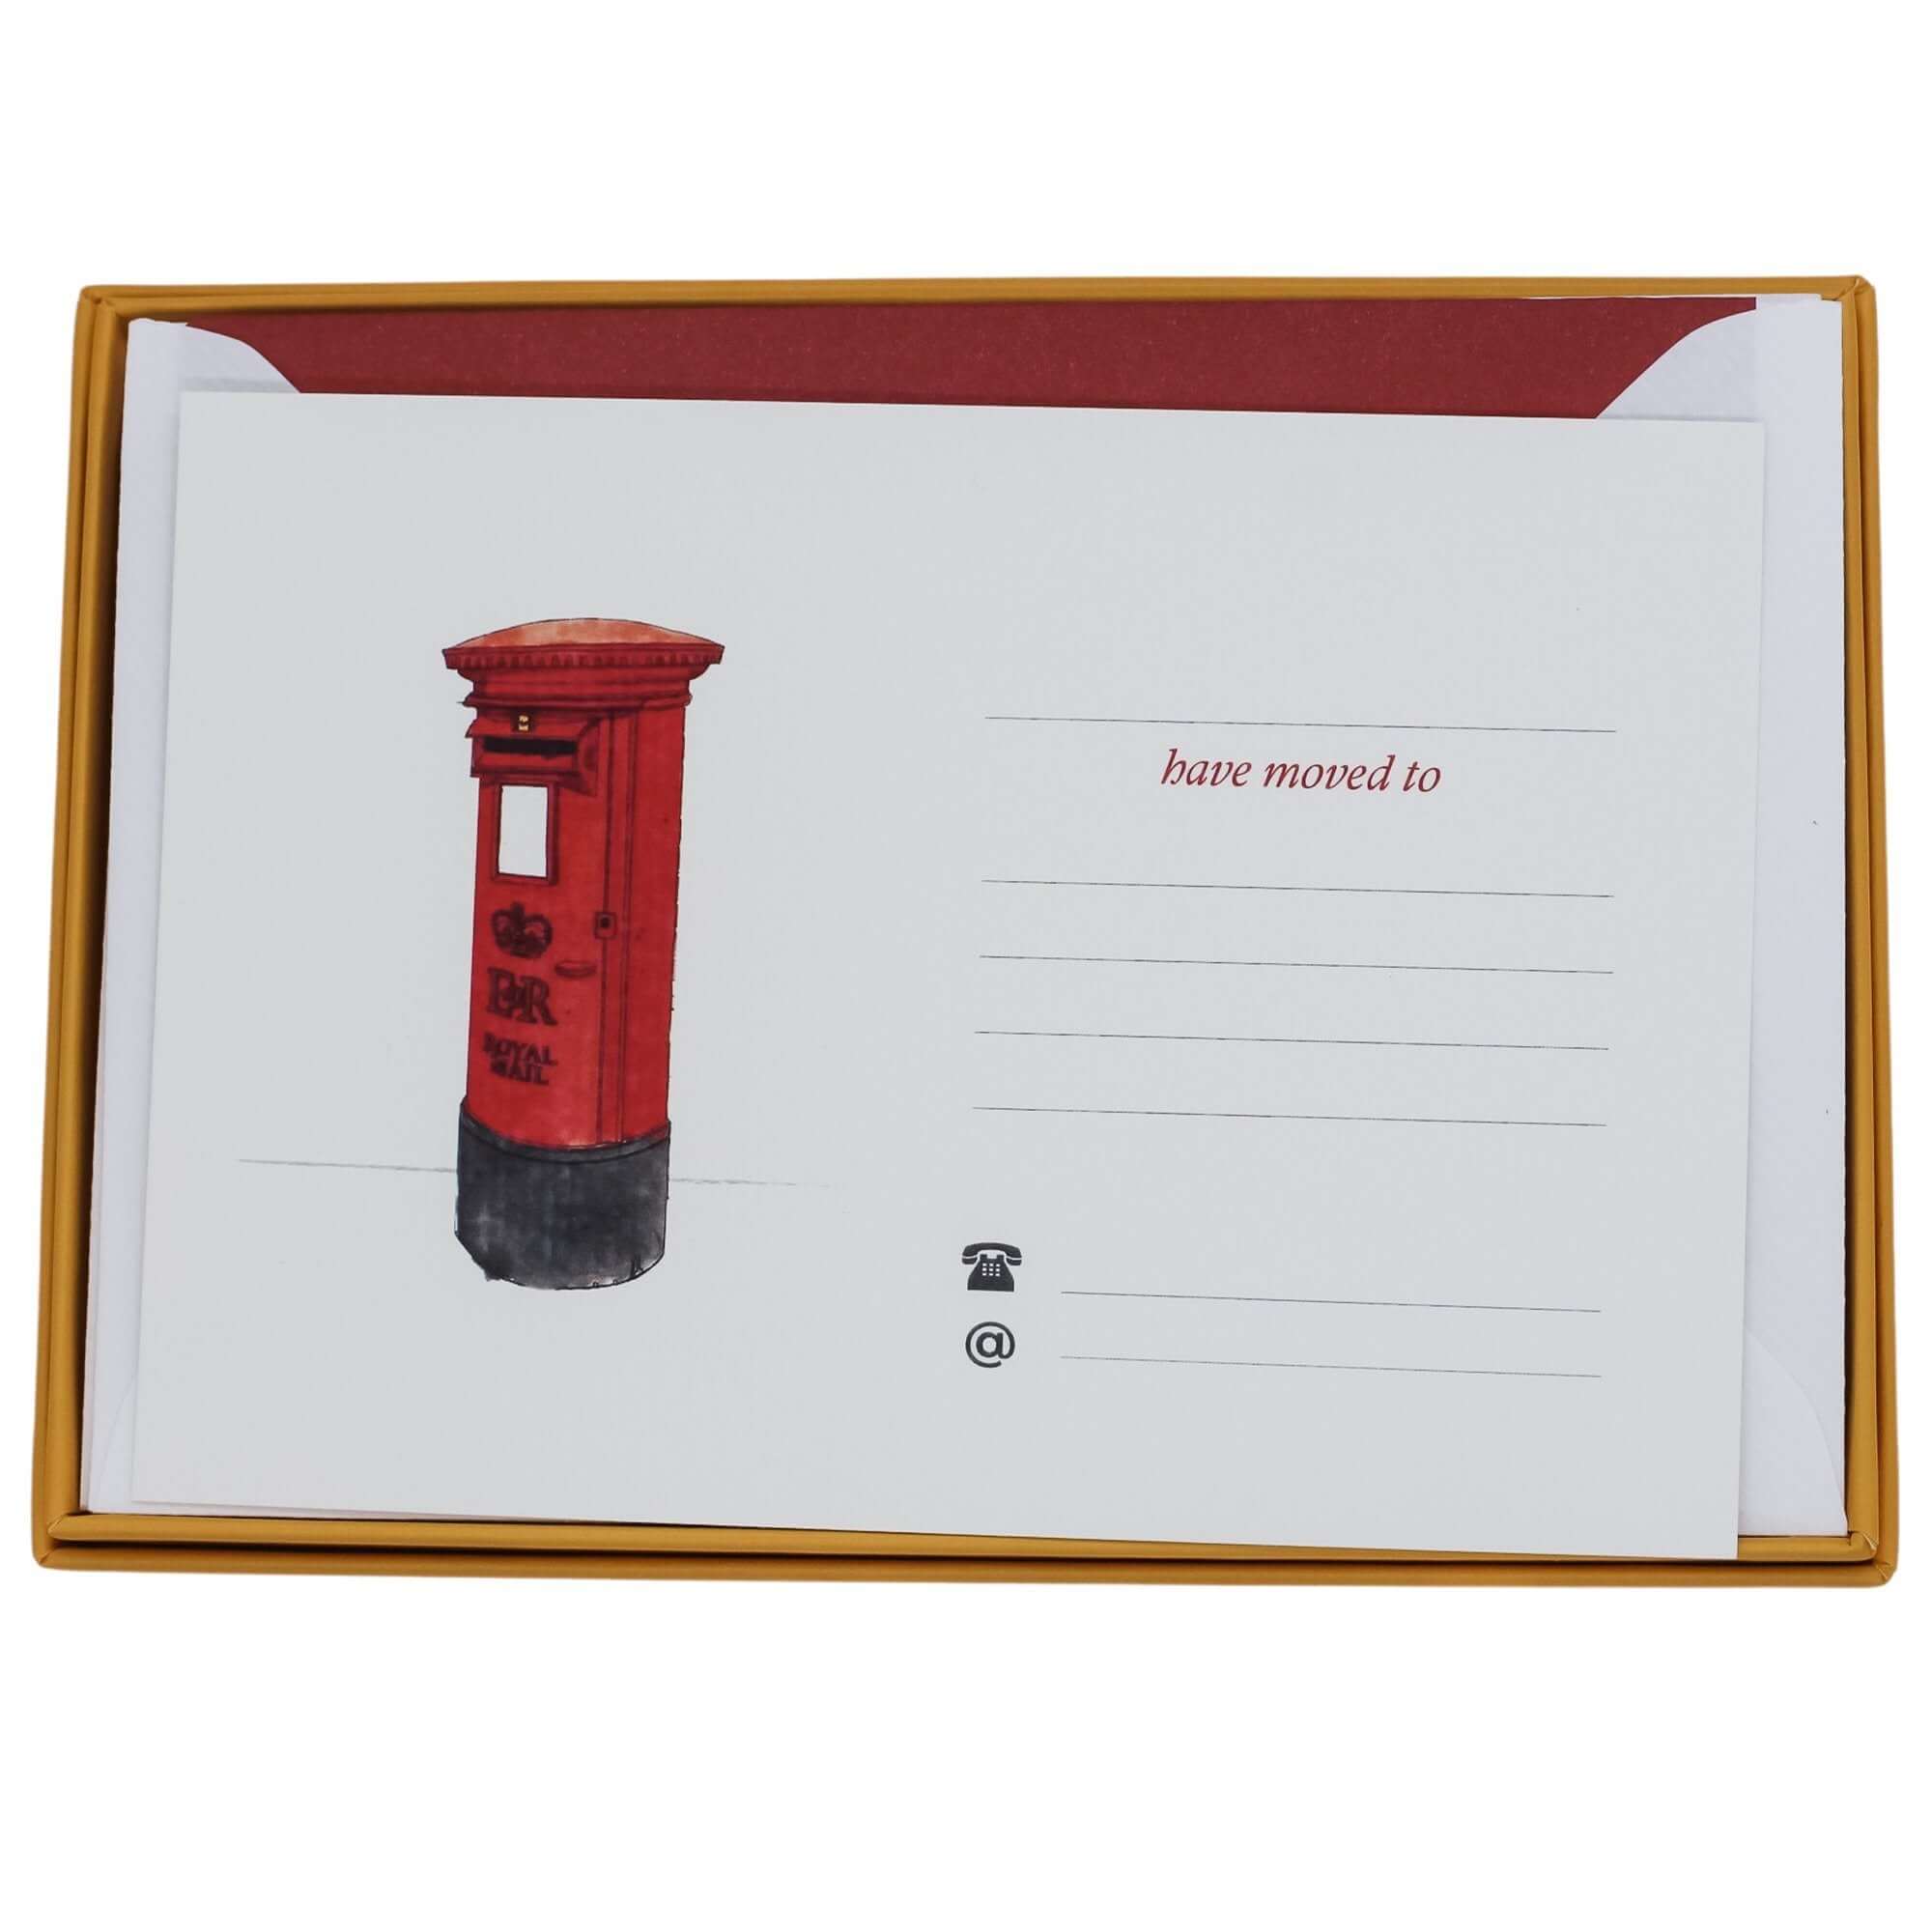 Pillarbox Change of Address Card Set with Lined Envelopes Change of Address Cards Mustard and Gray Ltd Shropshire UK